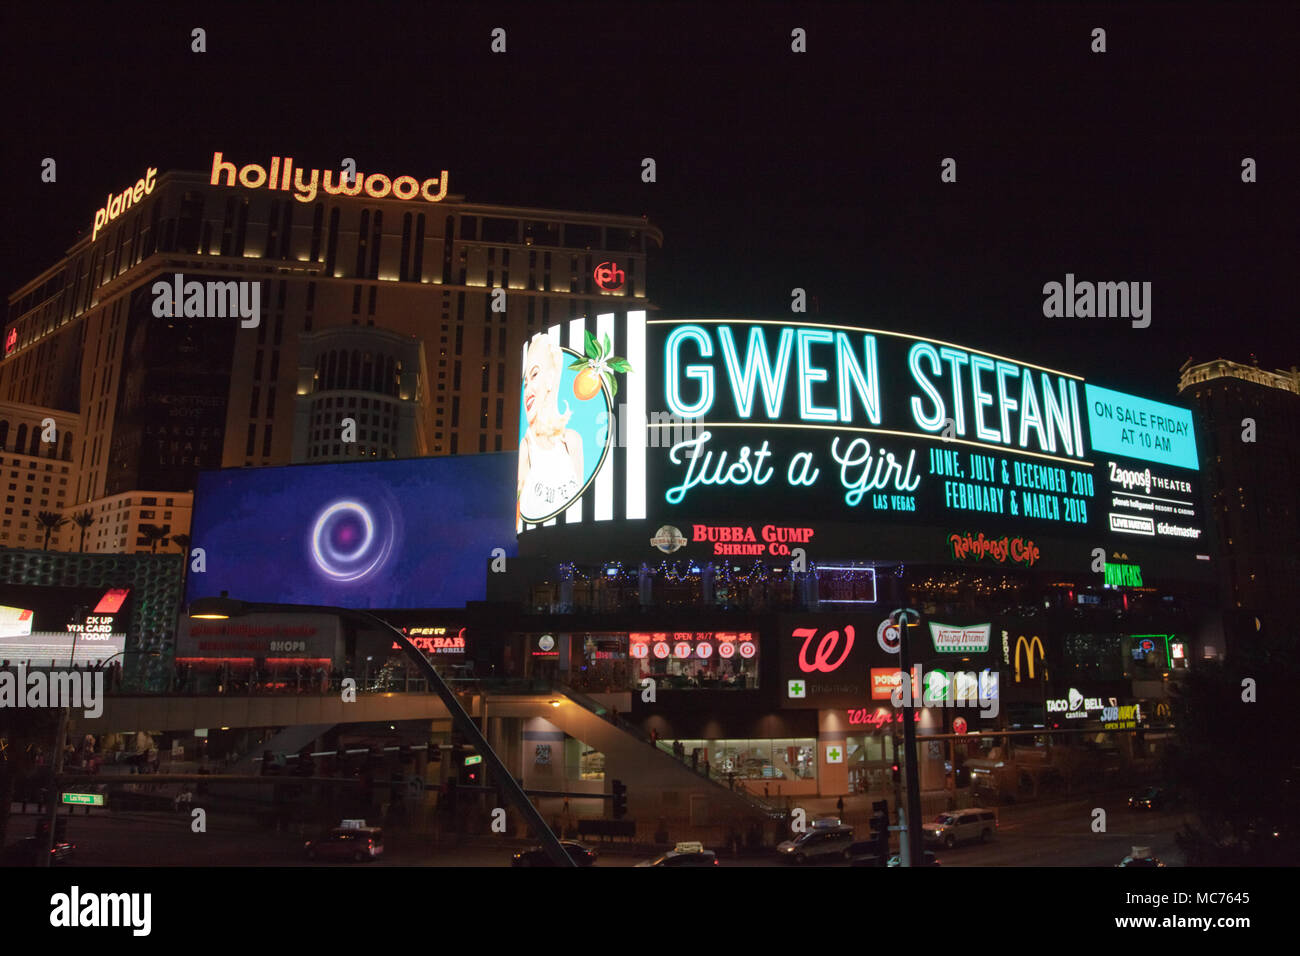 Planet Hollywood Hotel and Casino. Las Vegas. Gwen Stefani on large digital billboard. Stock Photo